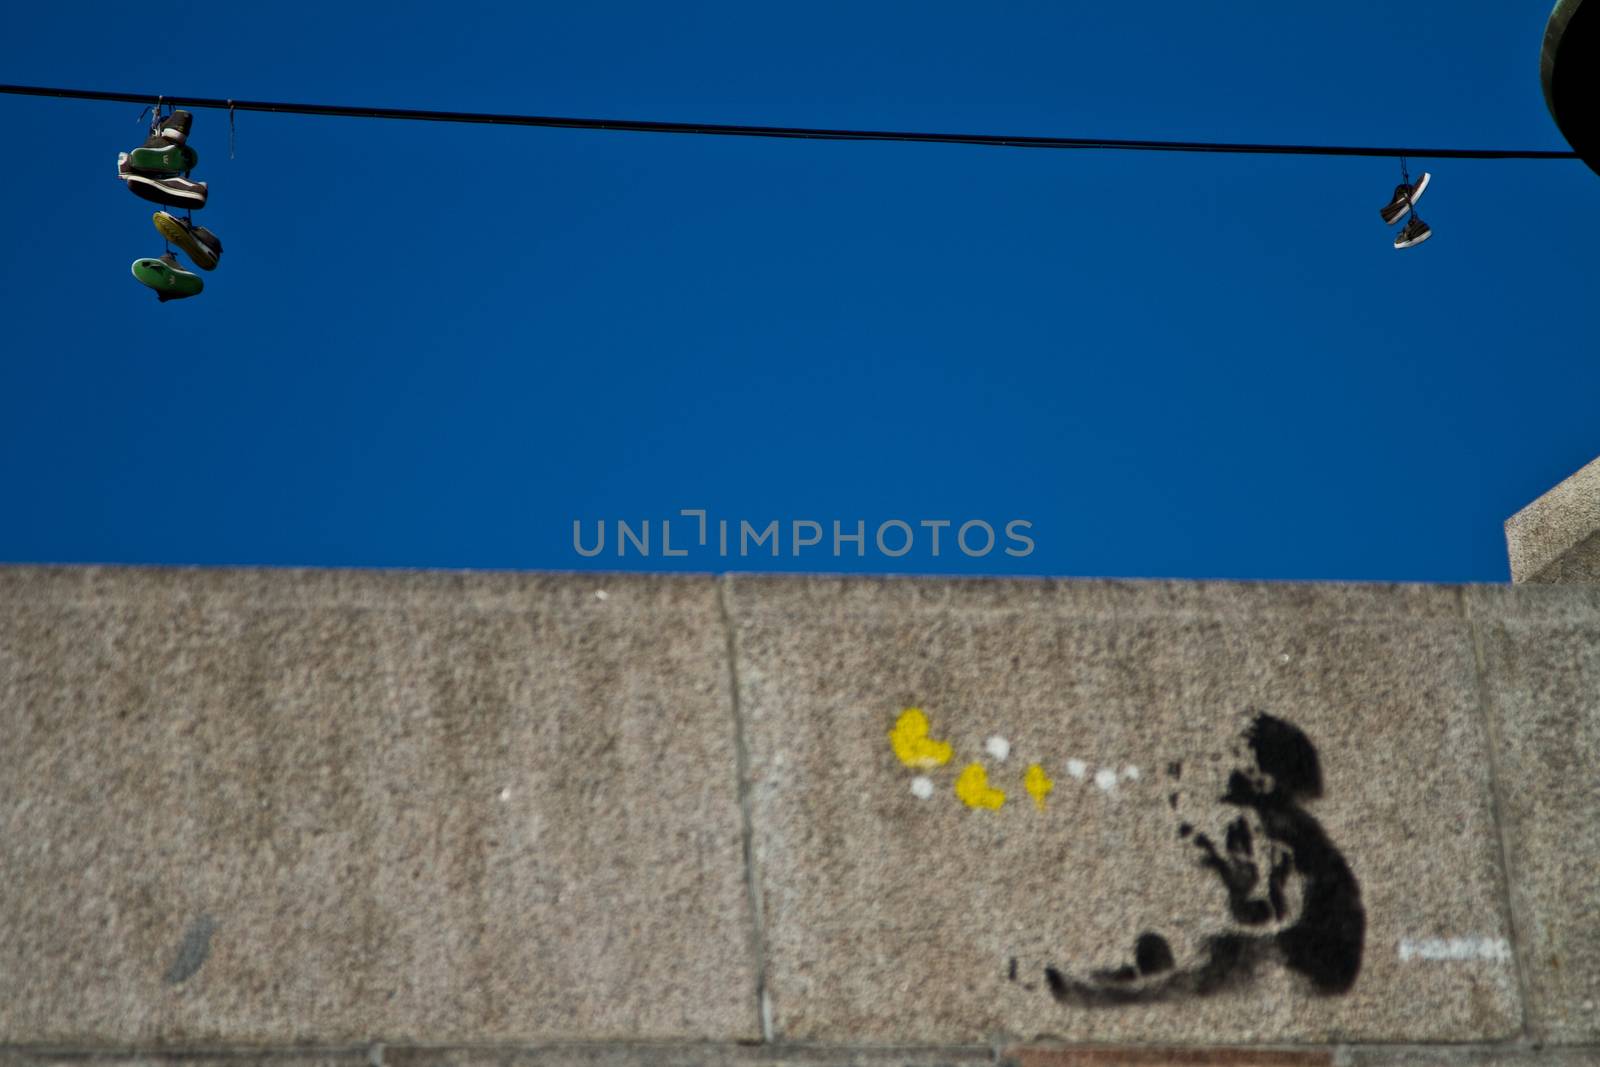 Graffiti on a wall of a boy blowing bubbles